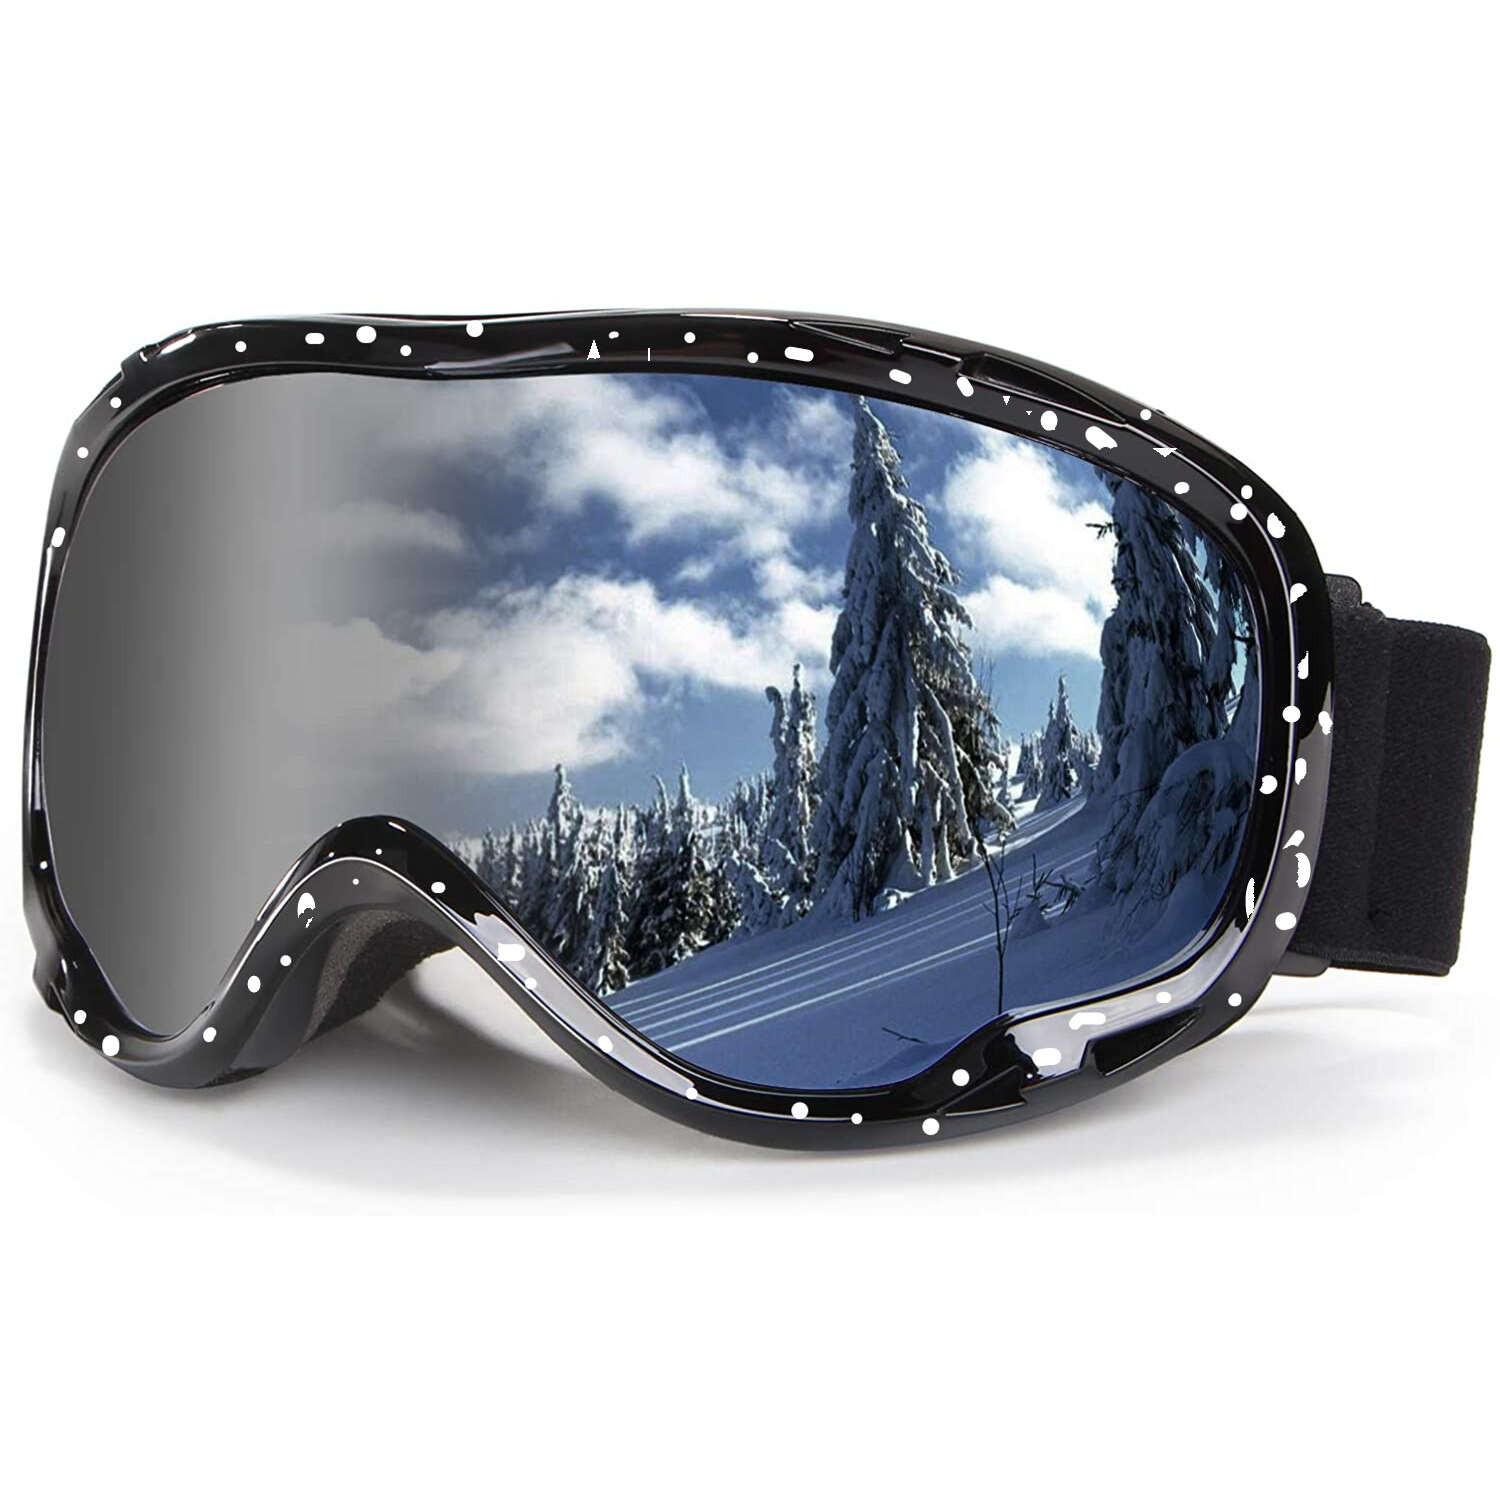 Dachuan Optical DRBHX20 China Supplier Fashion Oversize Anti Fog Ski Goggles with Optical Frame Adaptation (24)